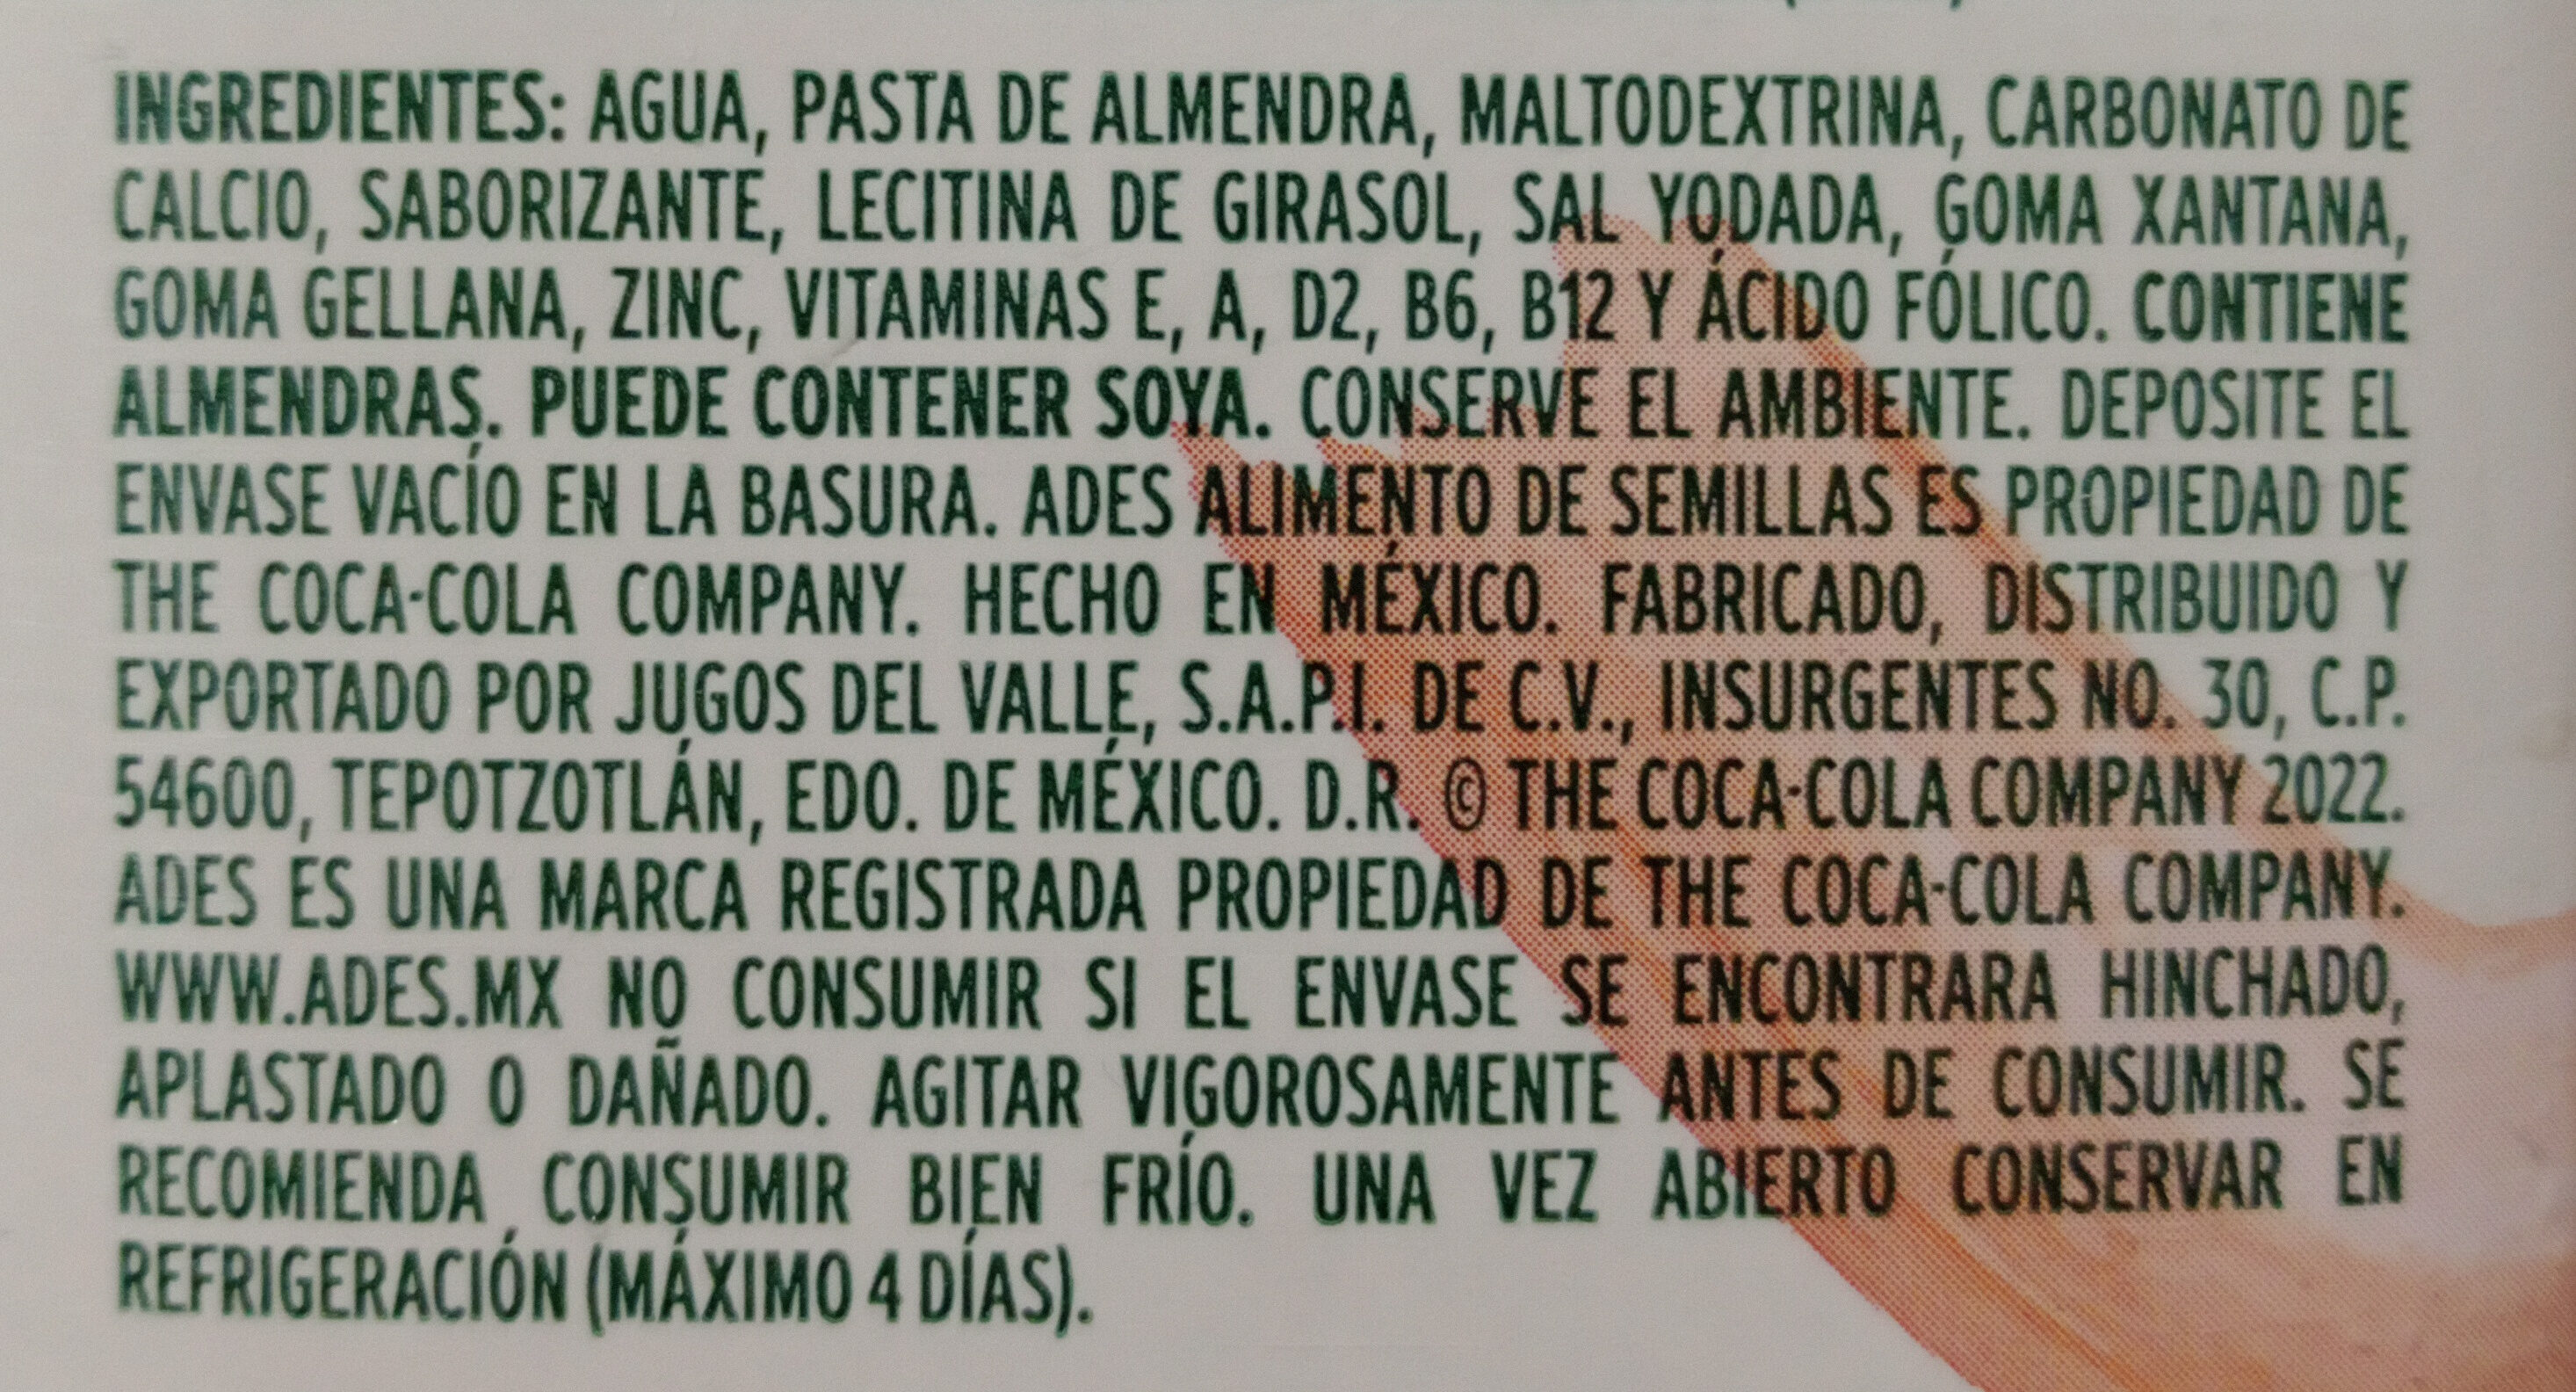 Ades ALMENDRA - Ingredientes